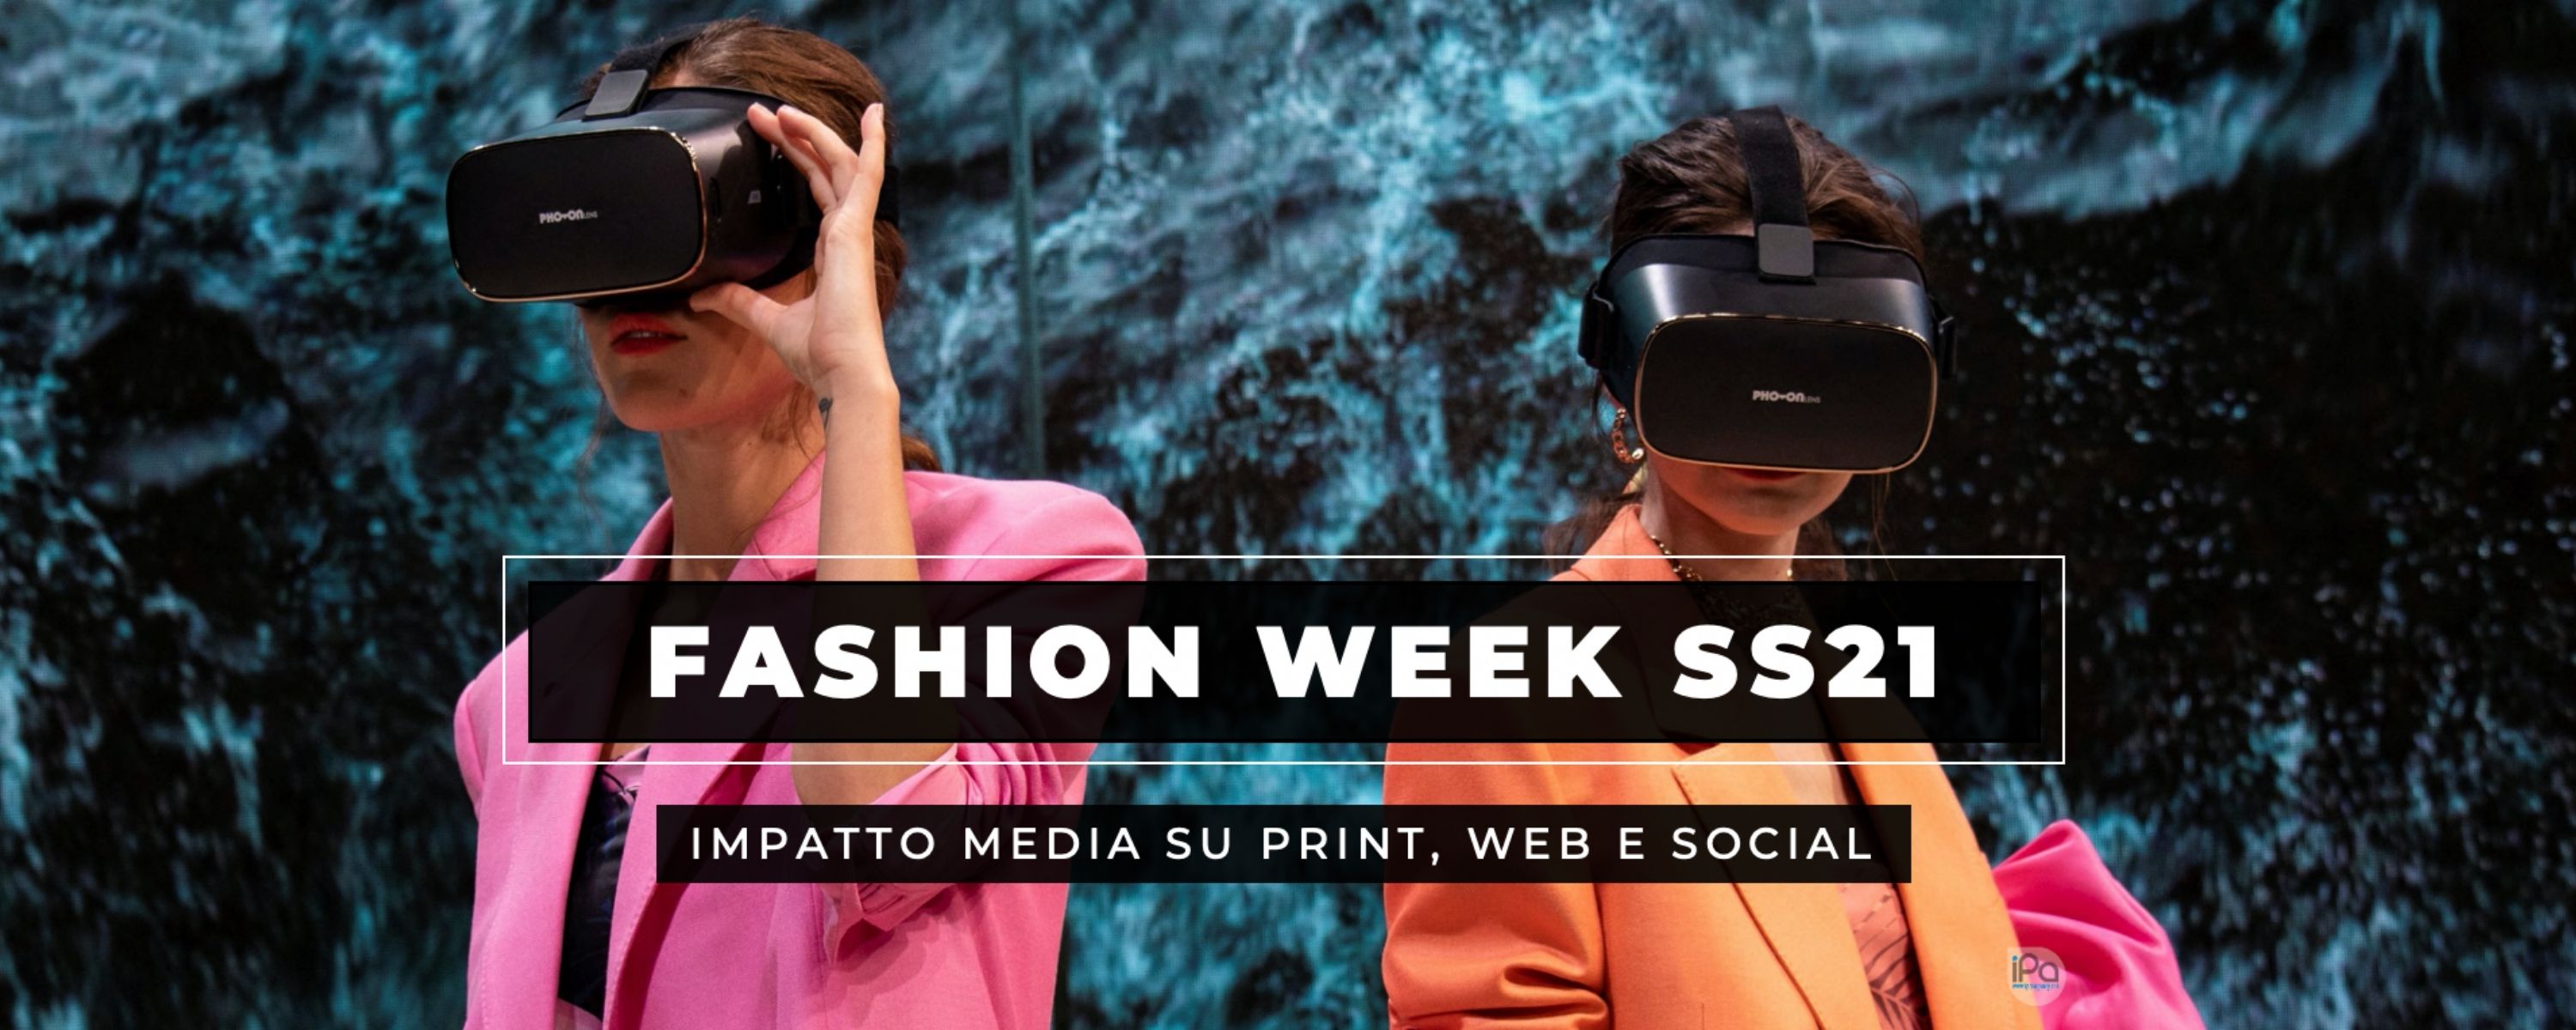 fashion week ss21